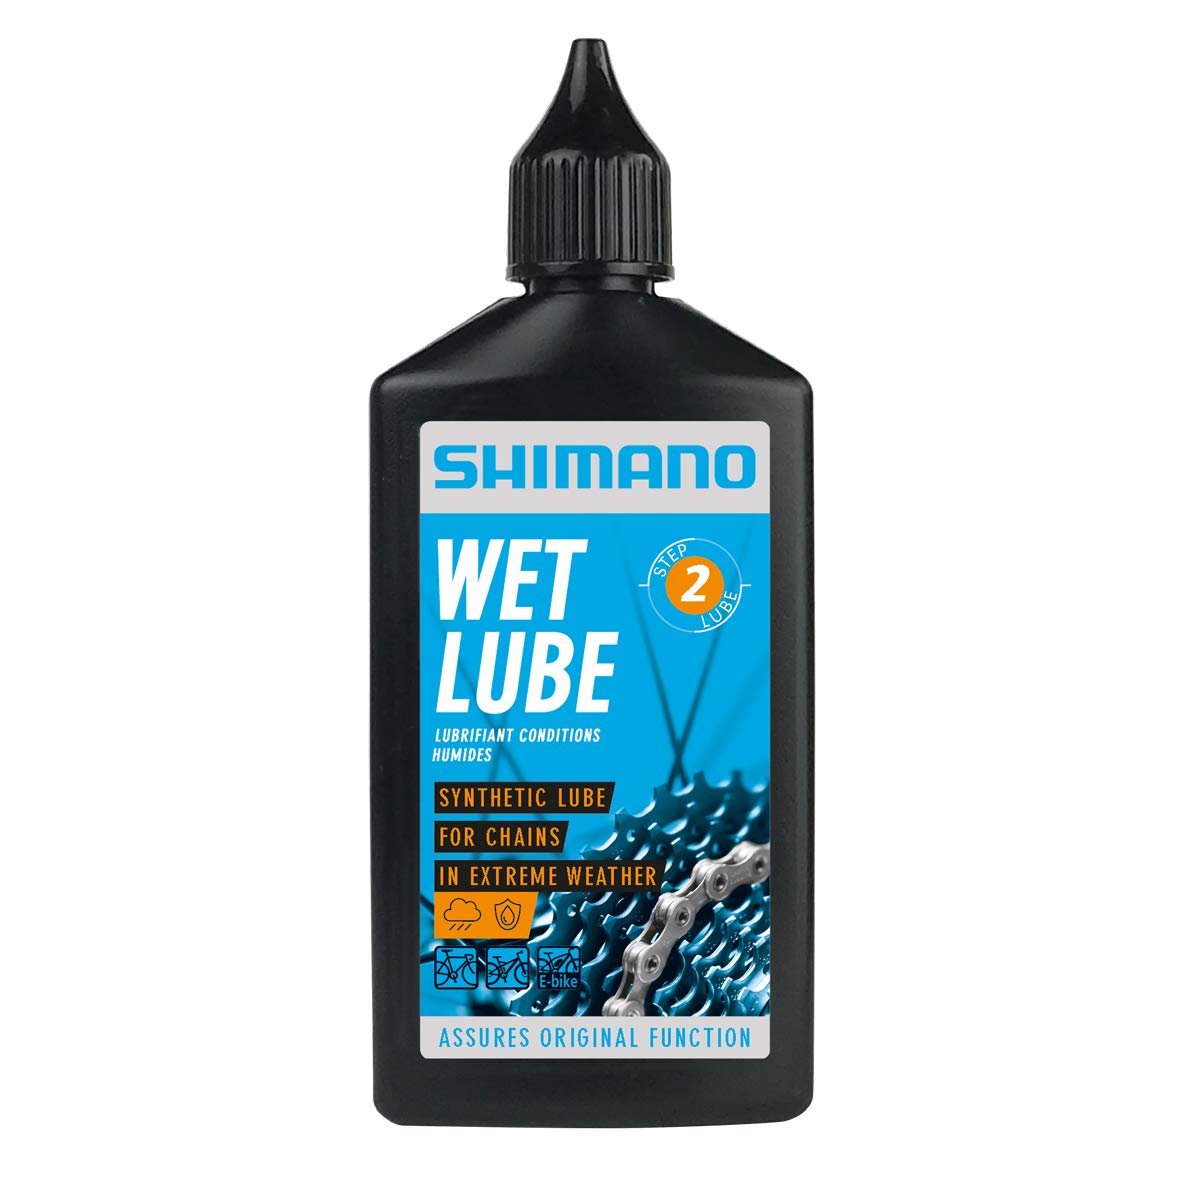 Смазка Shimano Wet Lube, для цепи, для влажной погоды, флакон, 100 мл, LBWL1B0100SA смазка muc off c3 ceramic wet lube 5ml sample для цепи б р 875